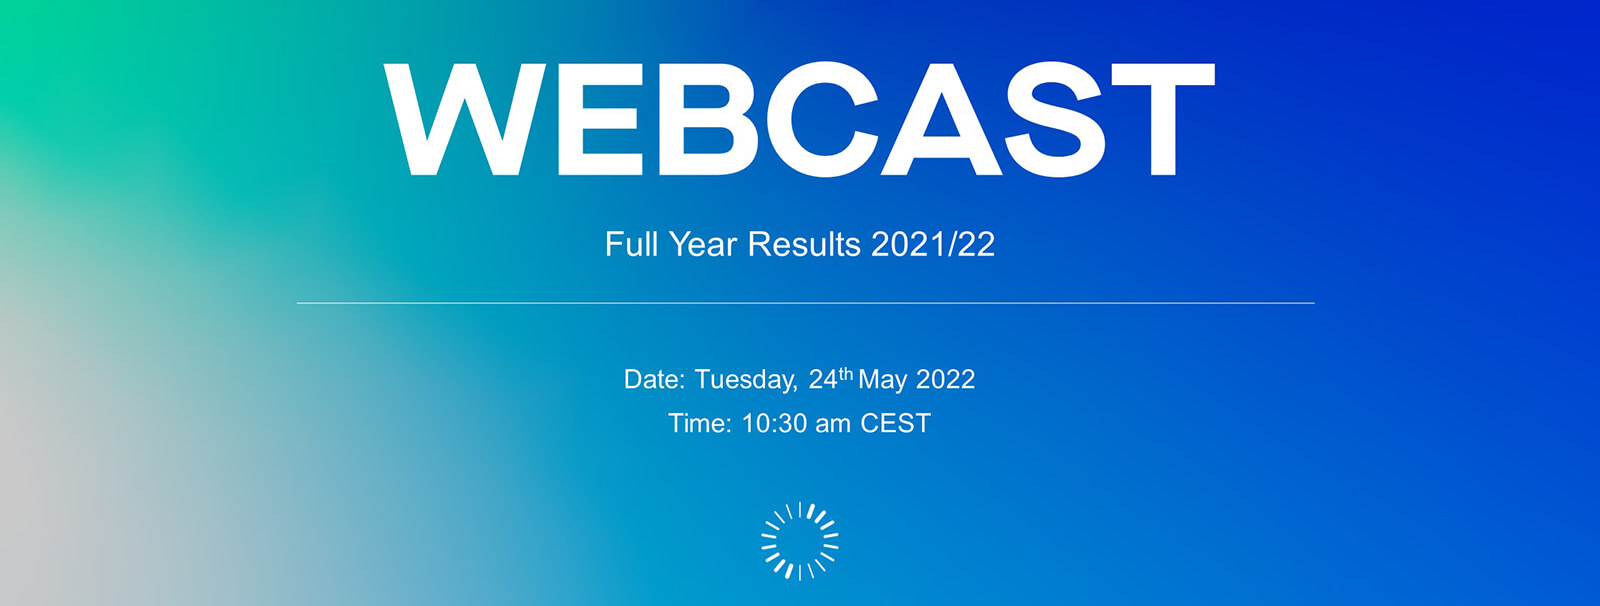 LEM_WEBCAST_FY_Result_2021-22